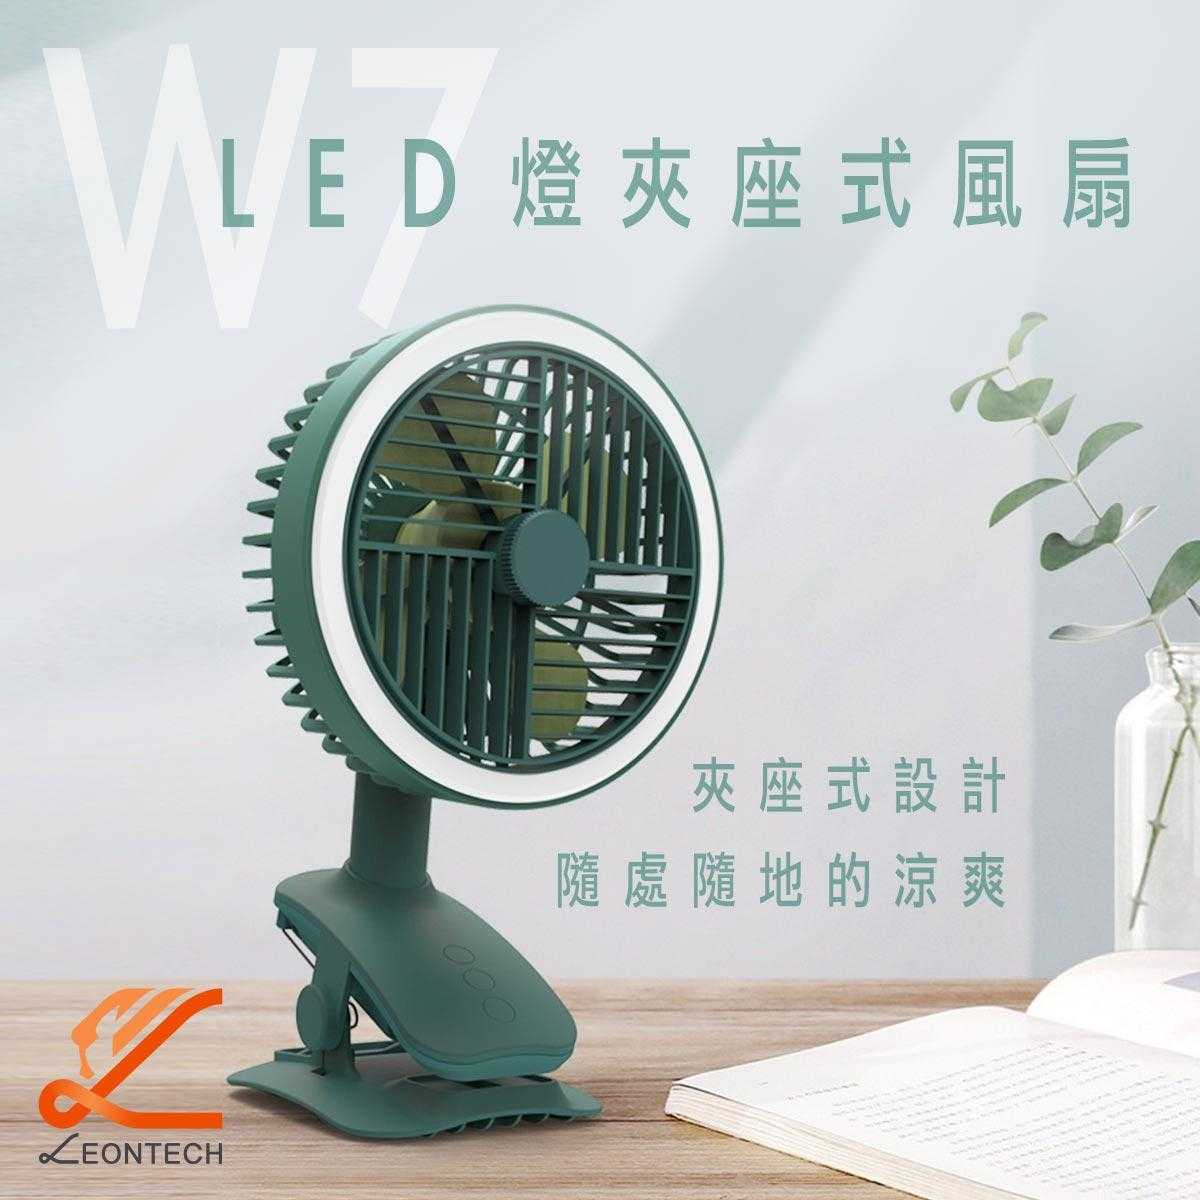 W7 LED燈夾座擺頭風扇 桌面夾式風扇 戶外風扇 充電風扇